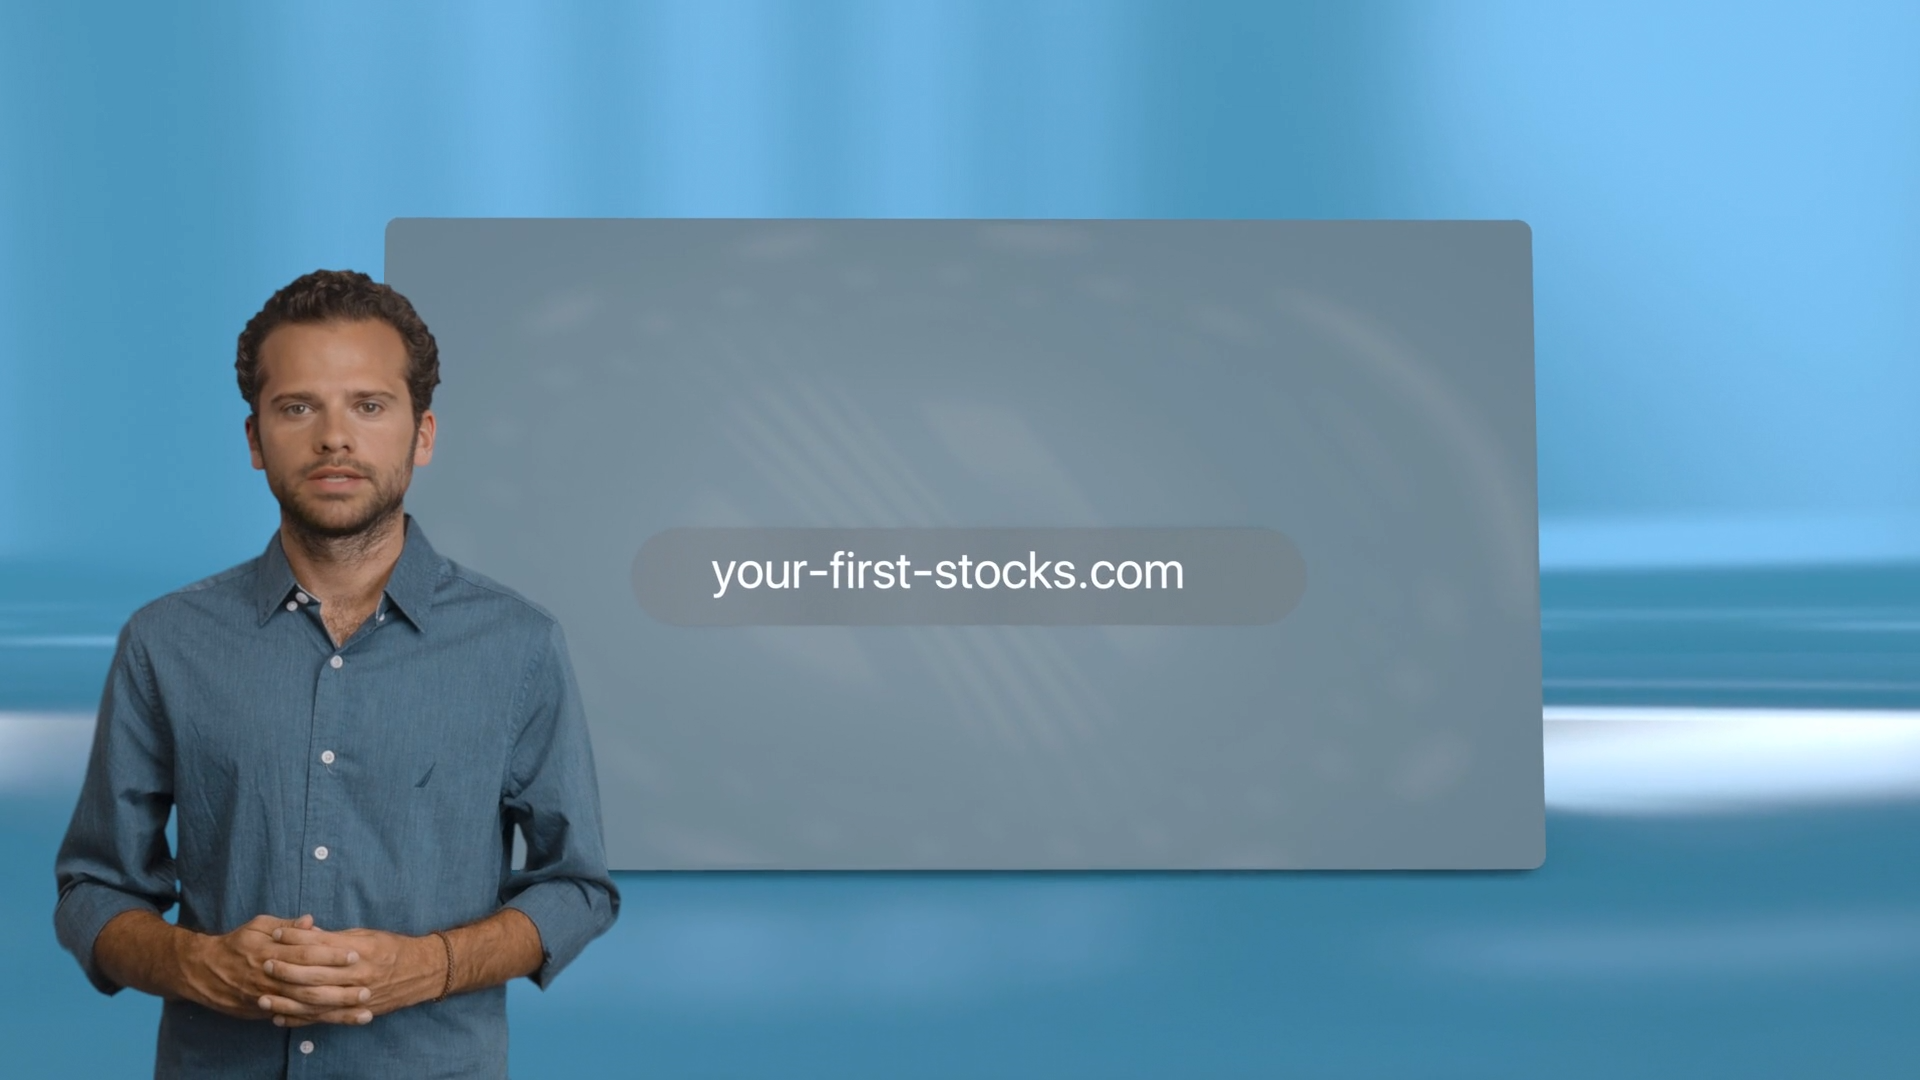 Stocks website mockup